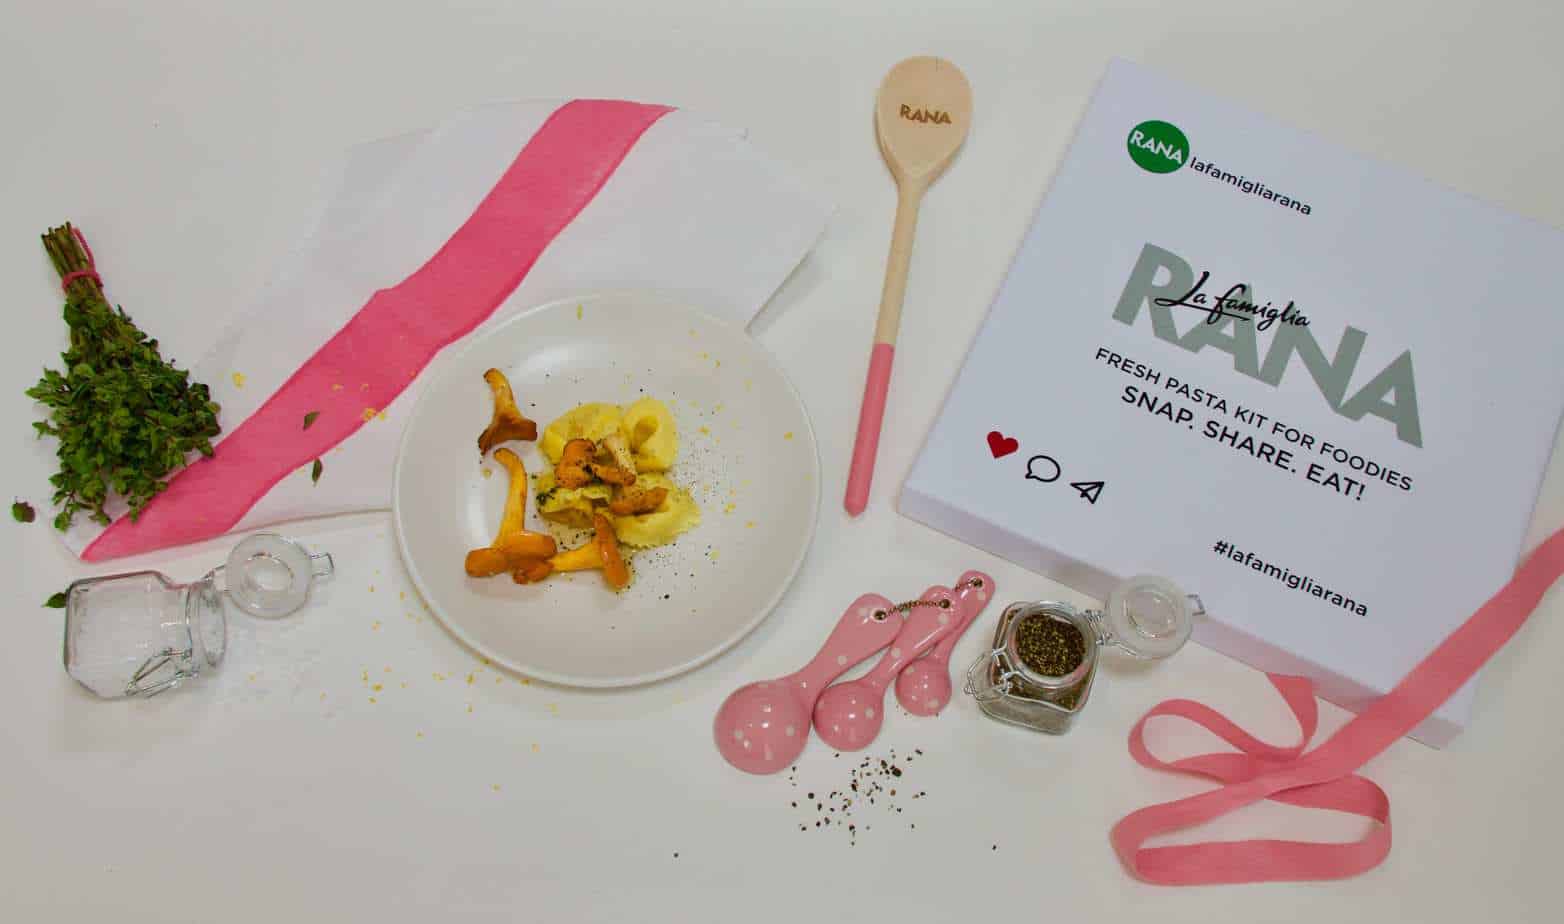 Rana Pasta: Limited Edition Kit